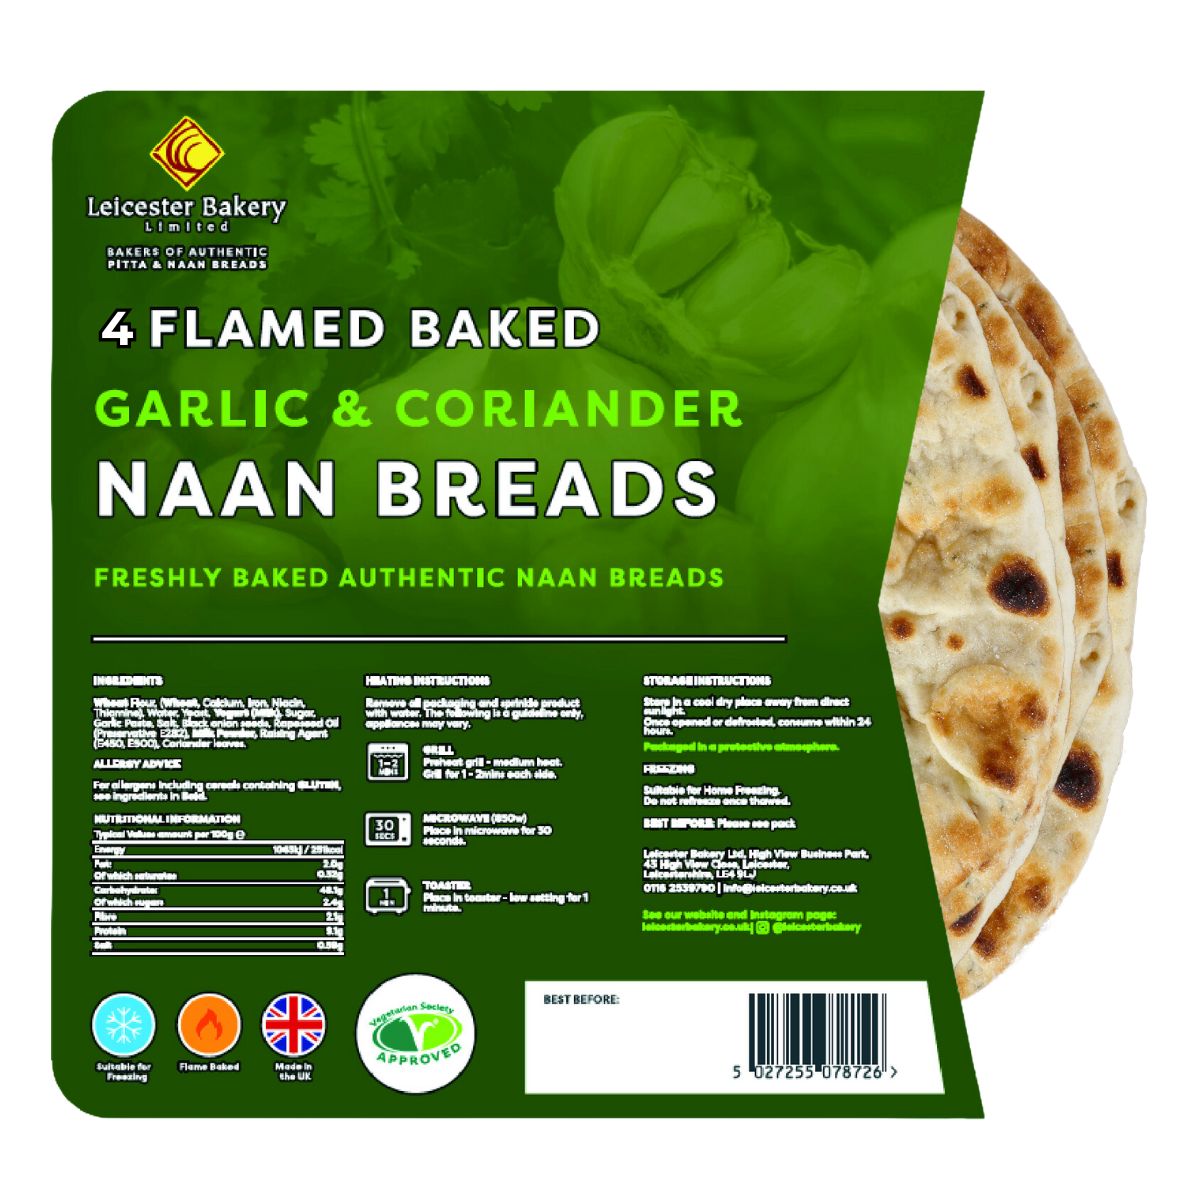 A Leicester Bakery - Garlic & Coriander Naan Bread - 4 Pack.